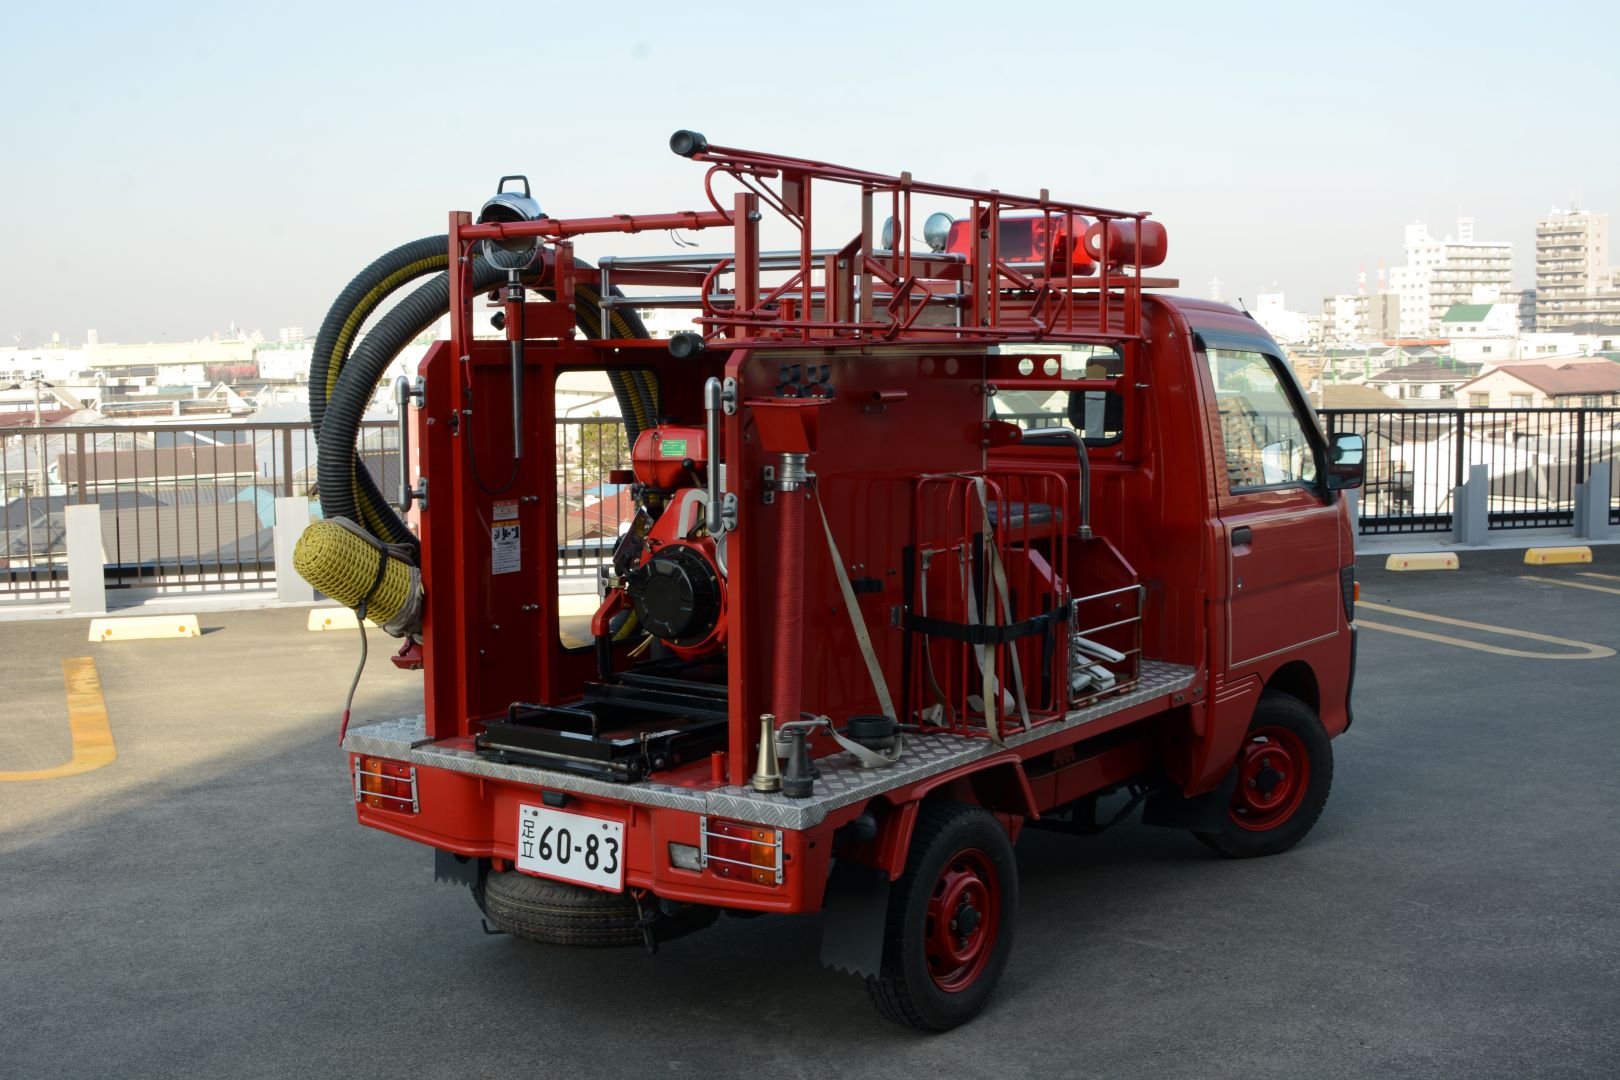 Daihatsu Hijet Fire Truck complete!